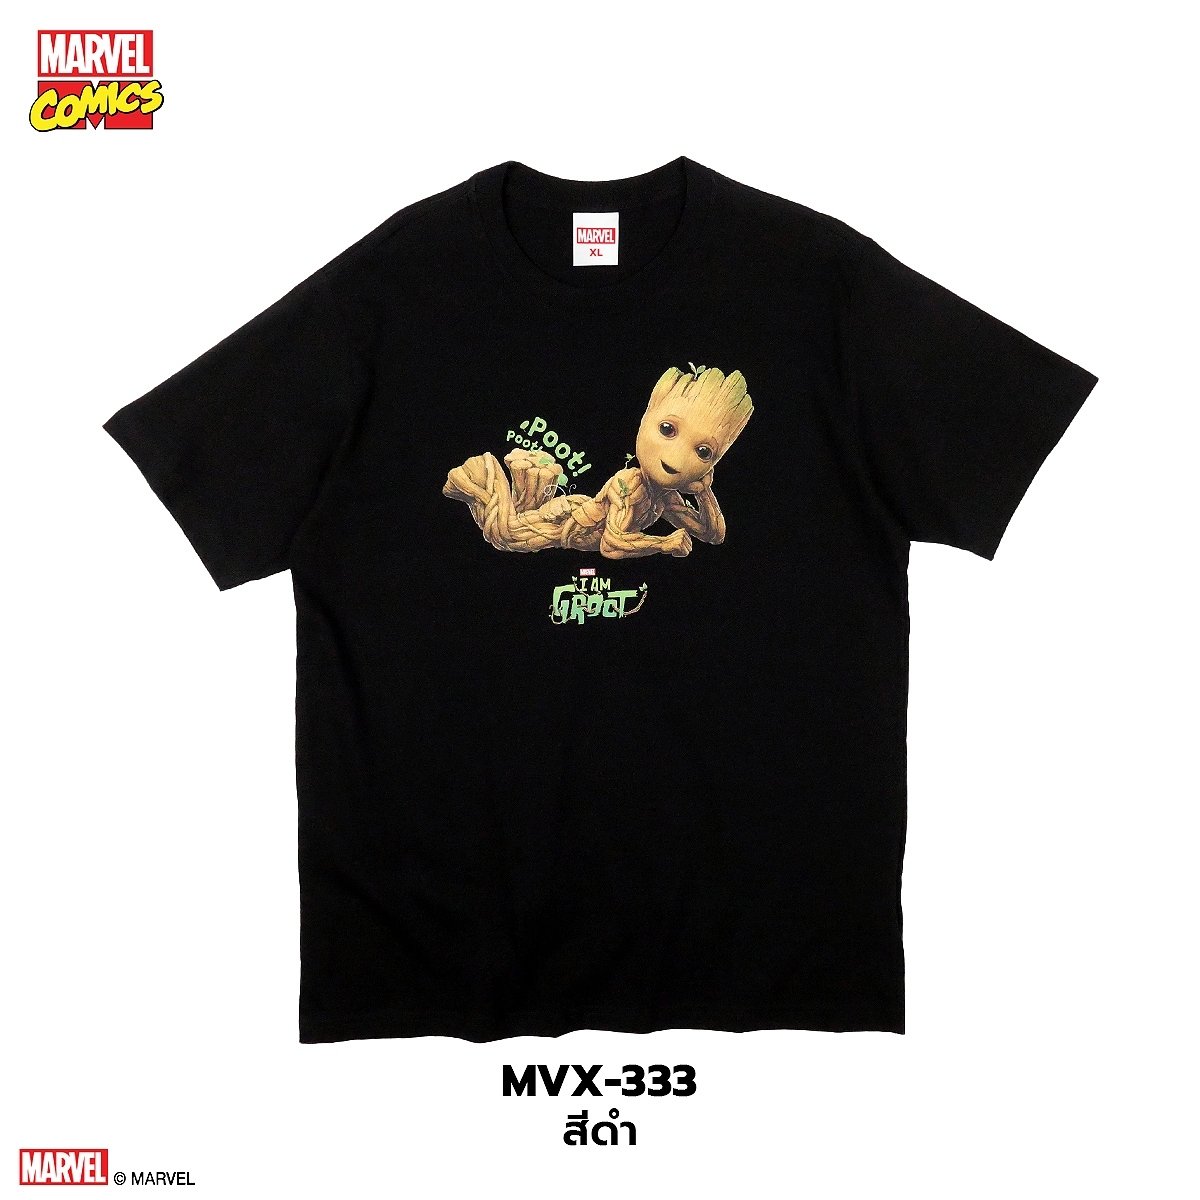 GROOT Marvel Comics T-shirt (MVX-333)